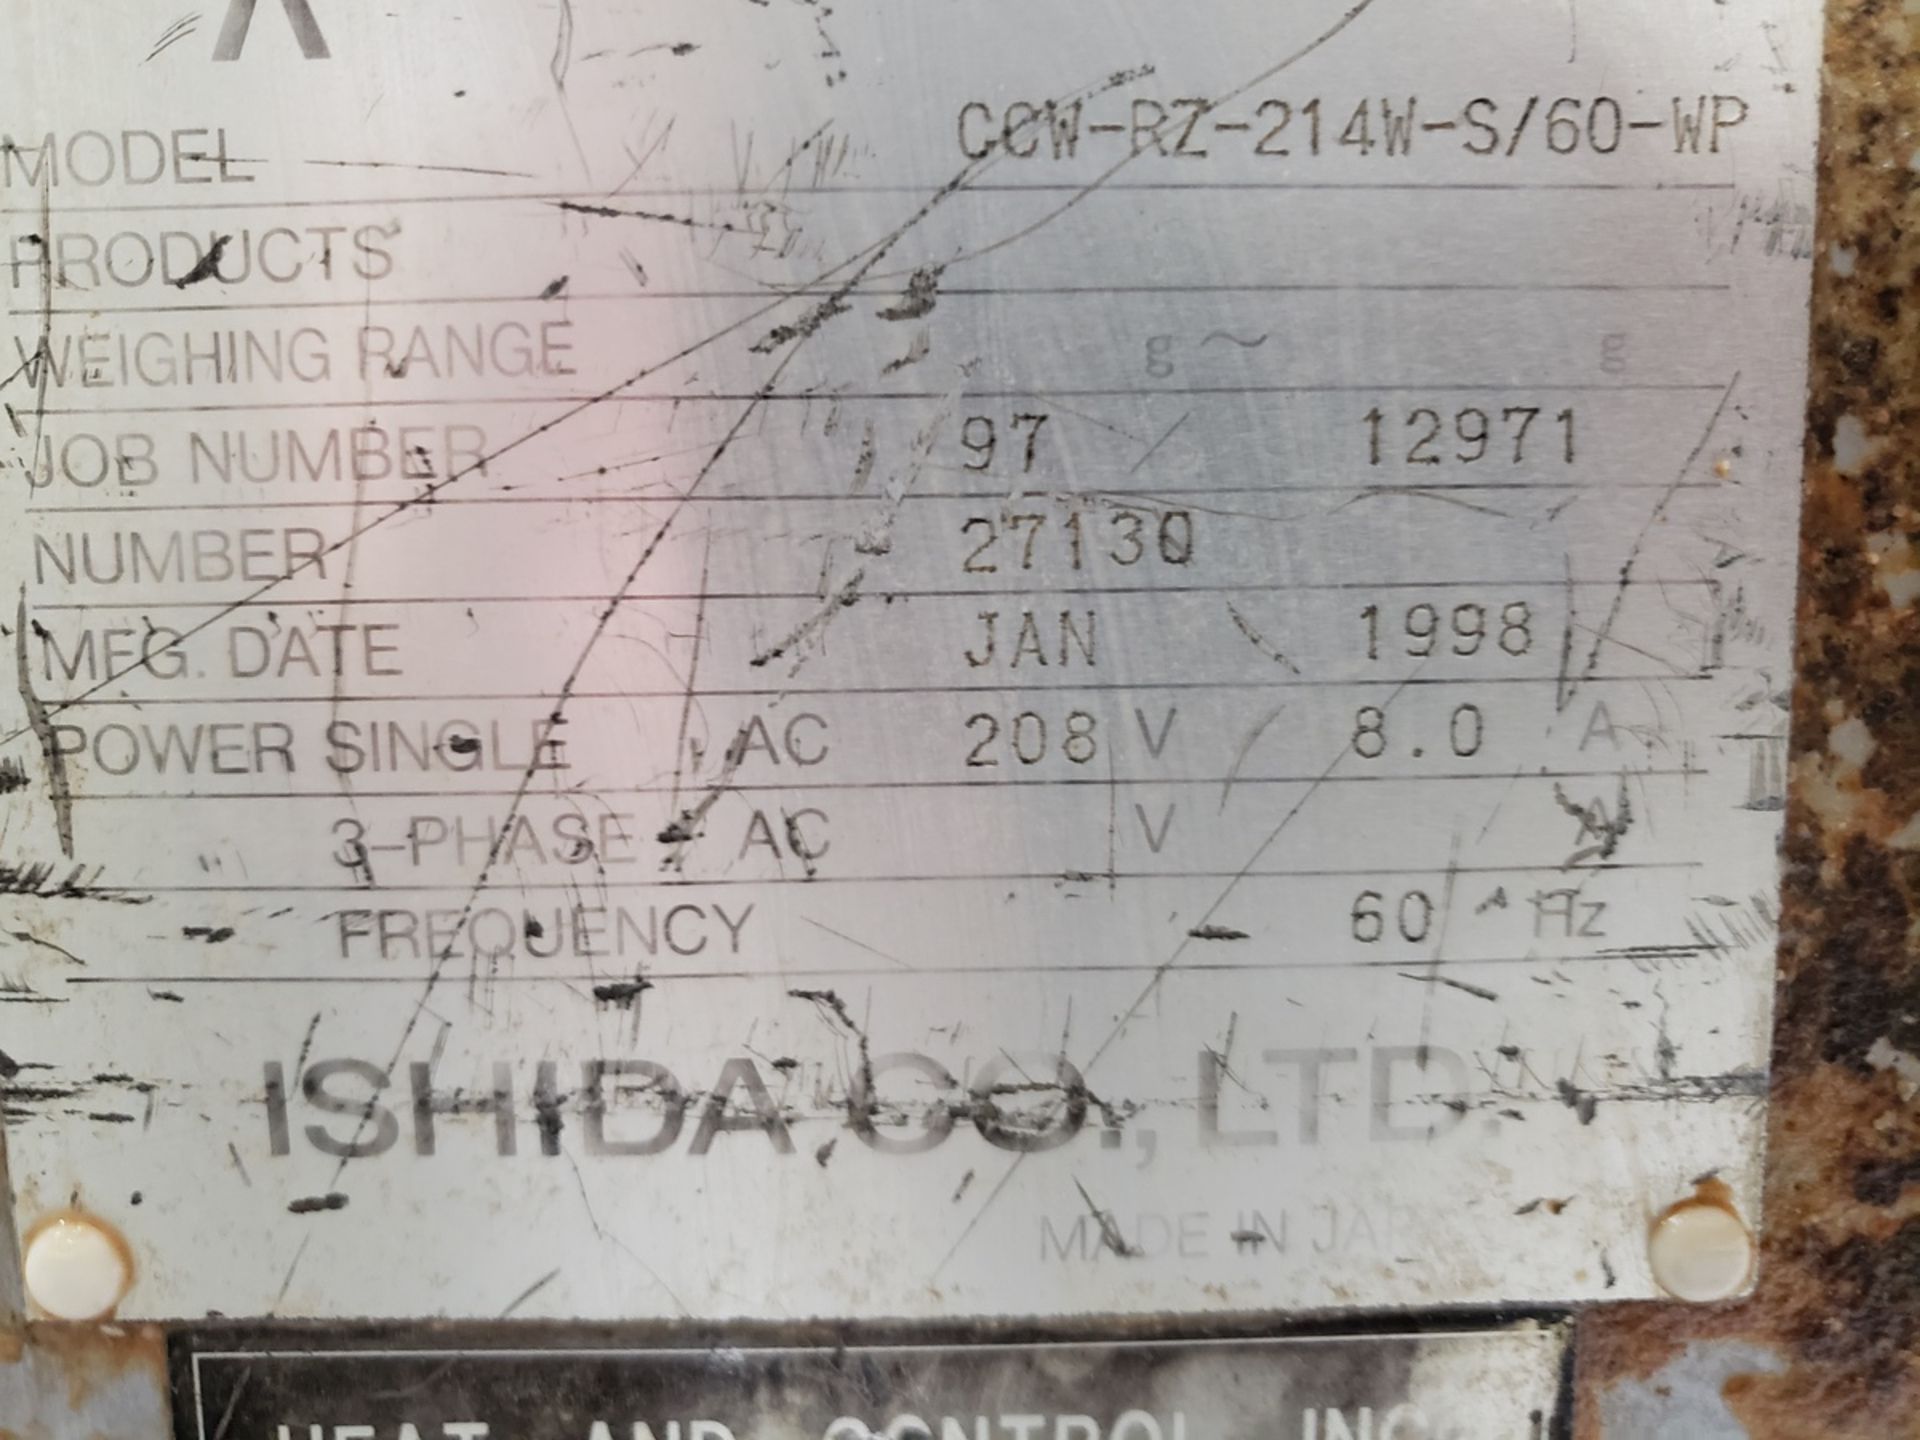 Ishida 14-Head Dimple Bucket Multi-Head Scale, M# CCW-RZ-214W-S/60-WP, S/N 27130 | Rig Fee 3000 Skid - Image 2 of 4